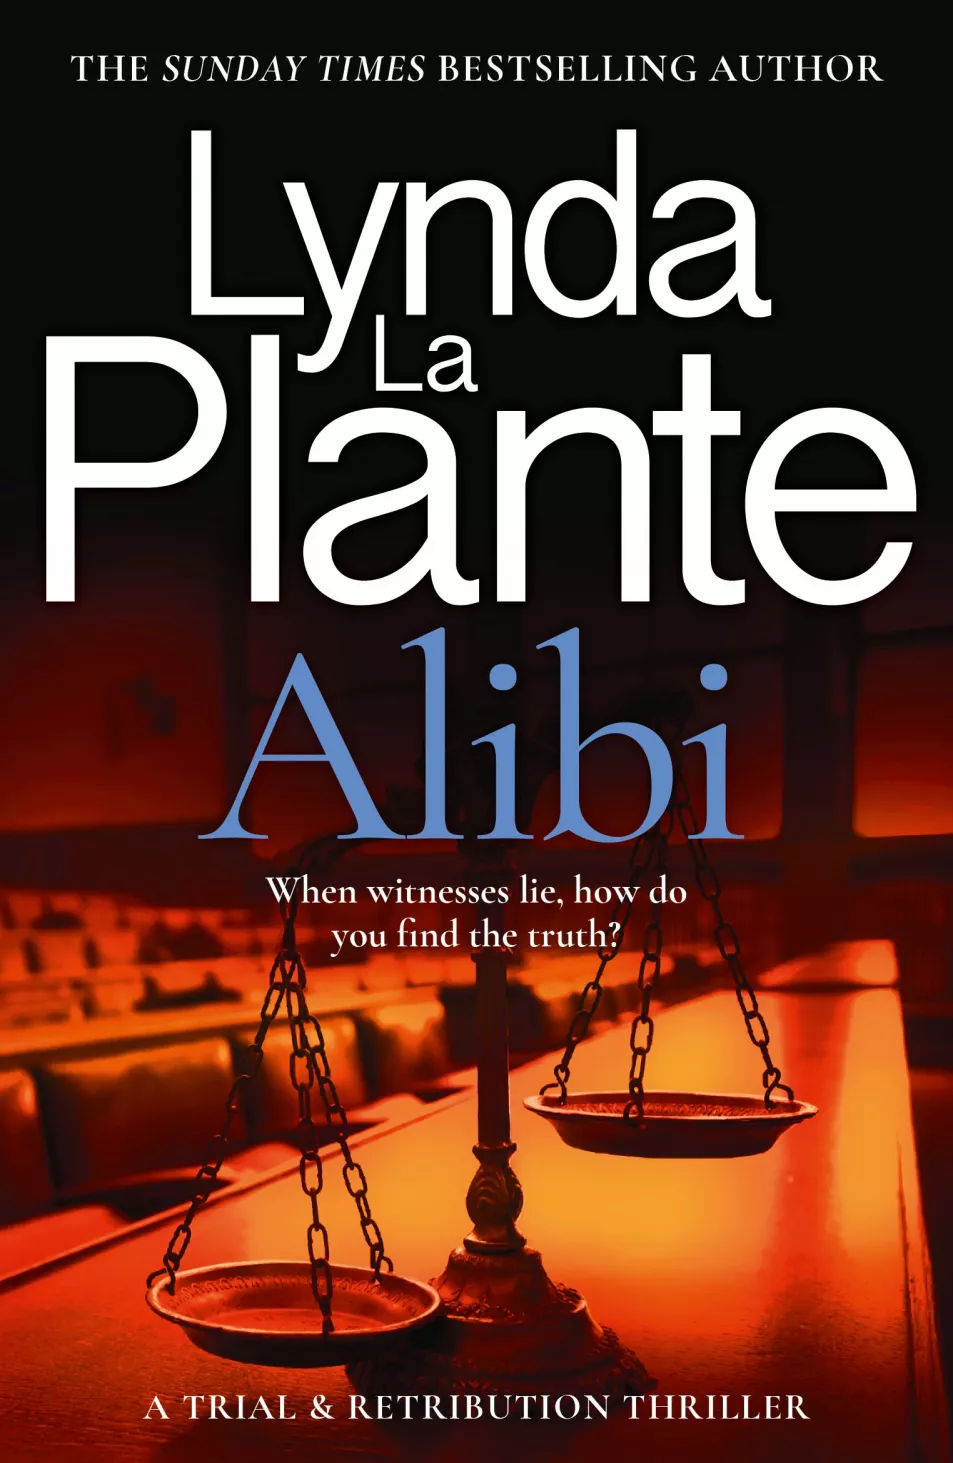 Alibi by Lynda La Plante